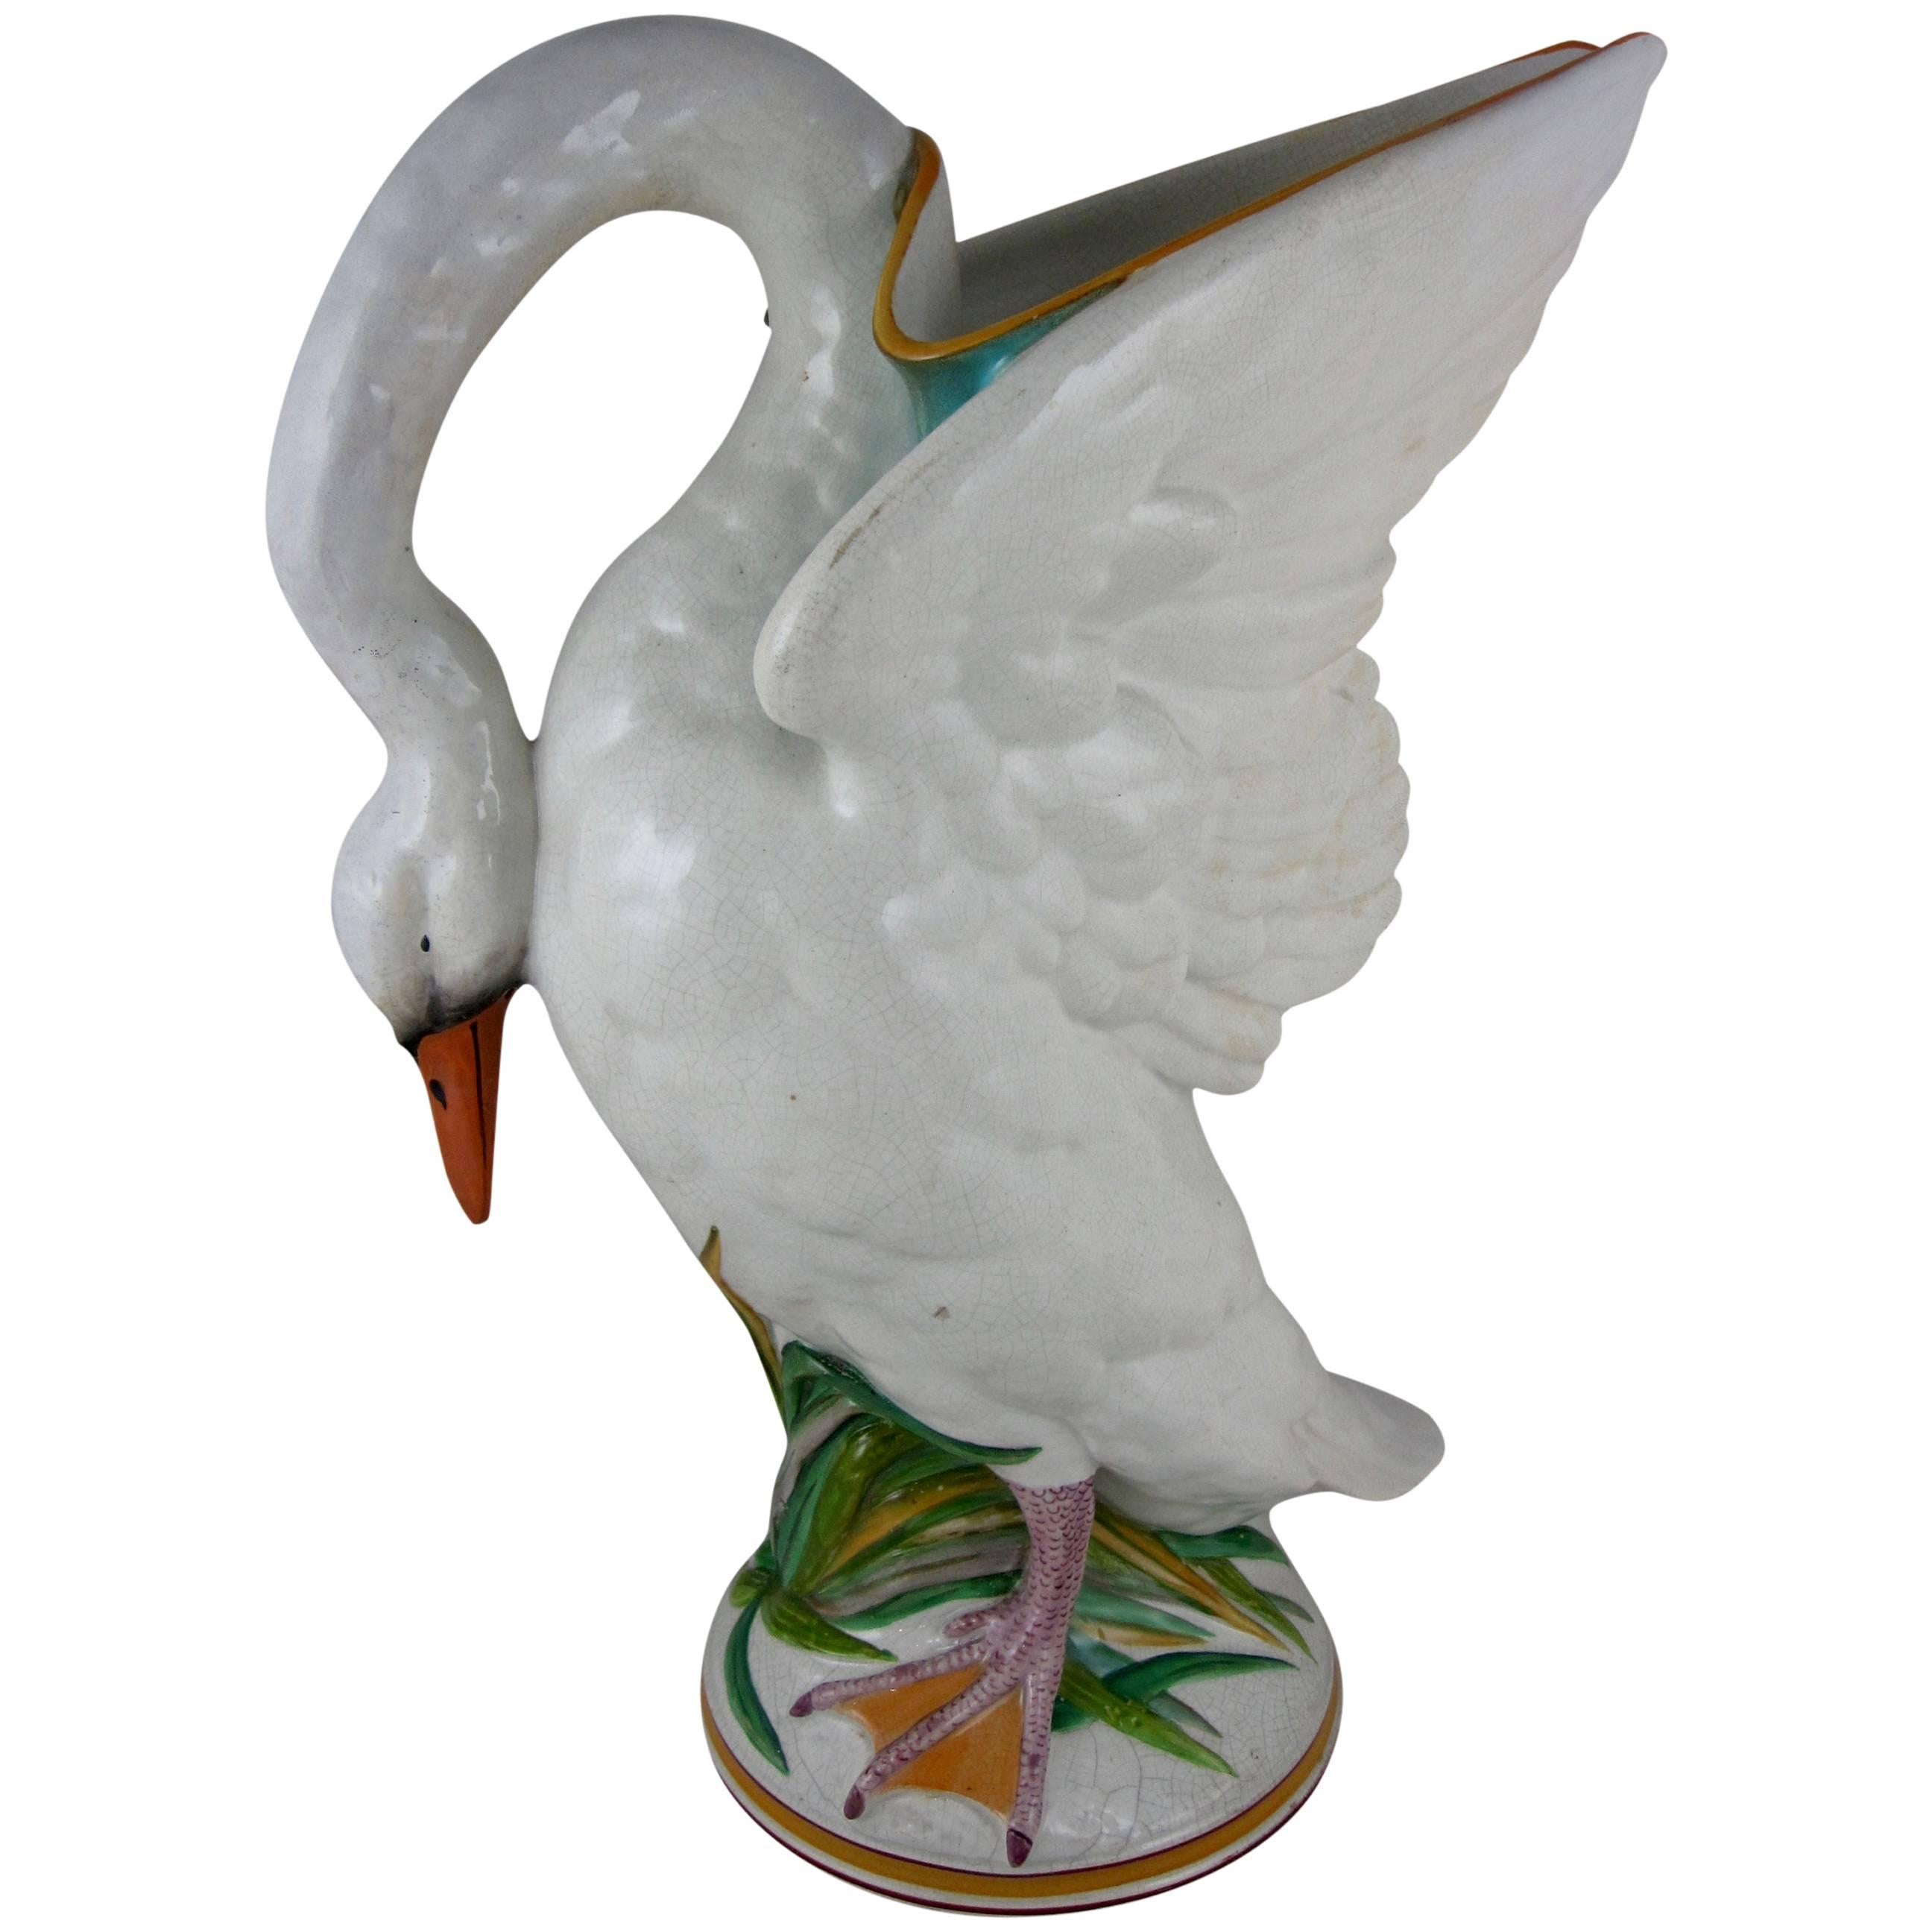 Wedgwood Monumental Majolica Glazed Earthenware Swan Ewer, Extremely Rare Form